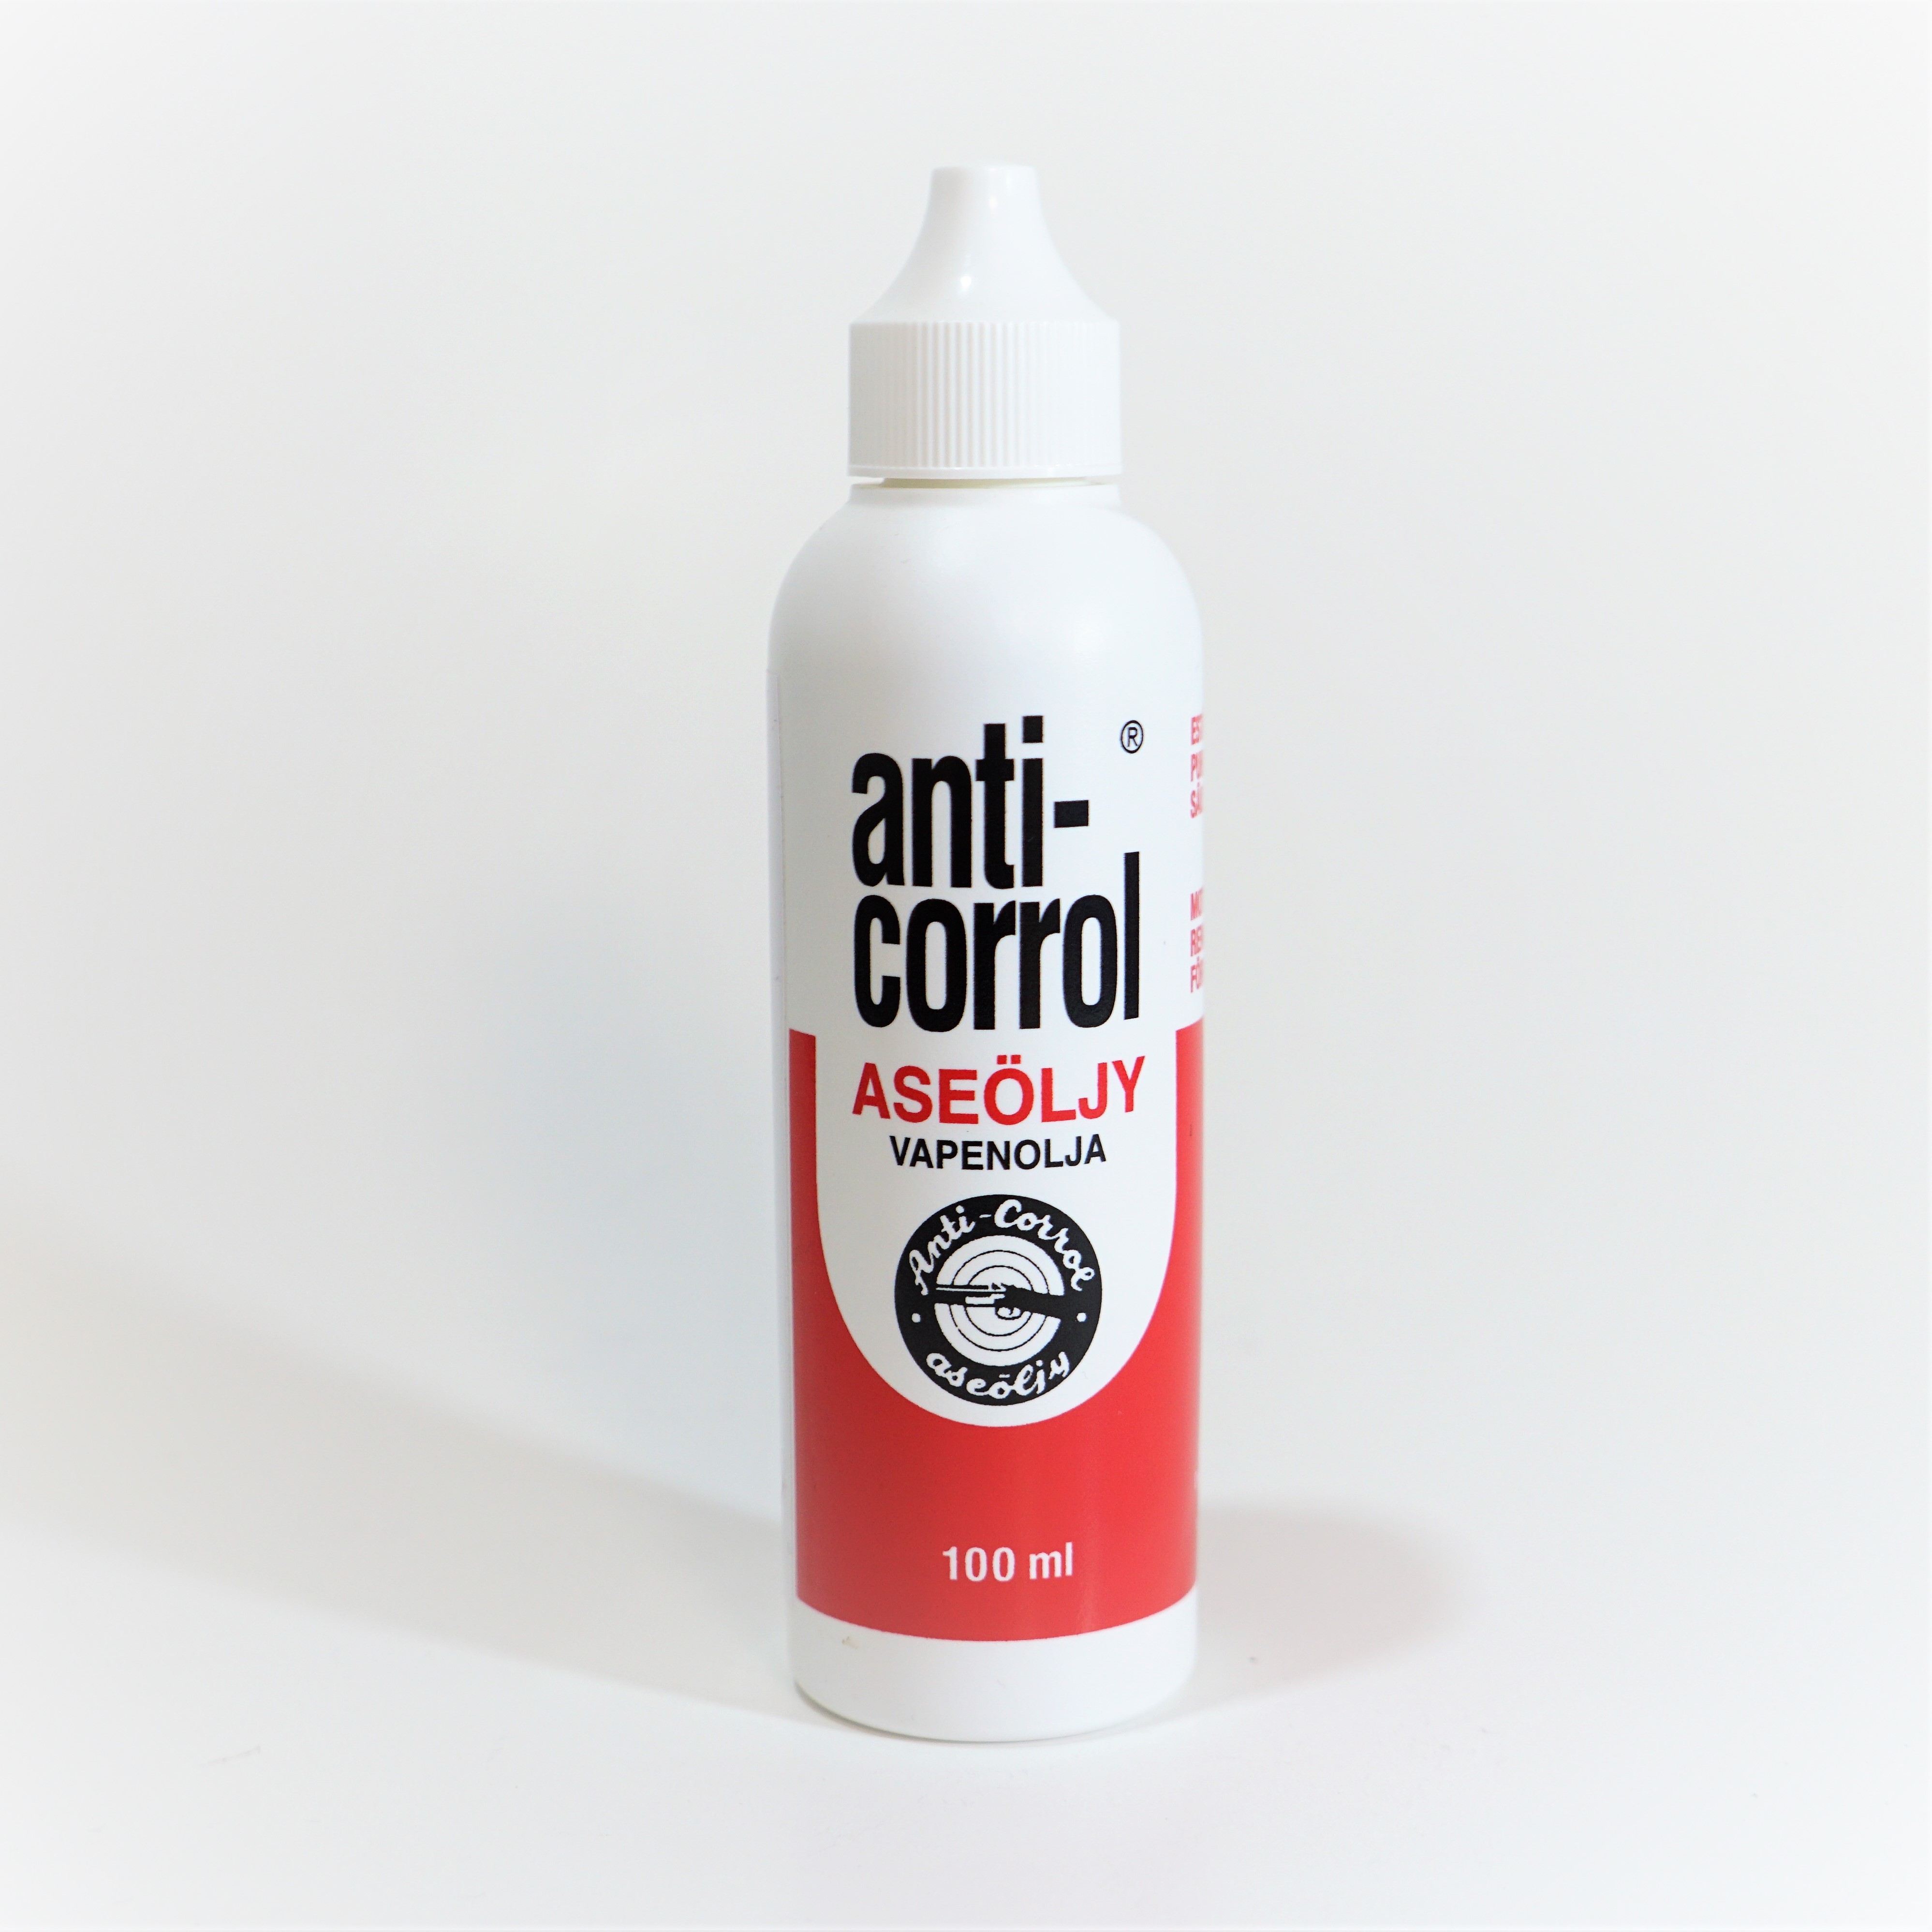 Anti-Corrol öljy 100 ml muovipullo                                                                            